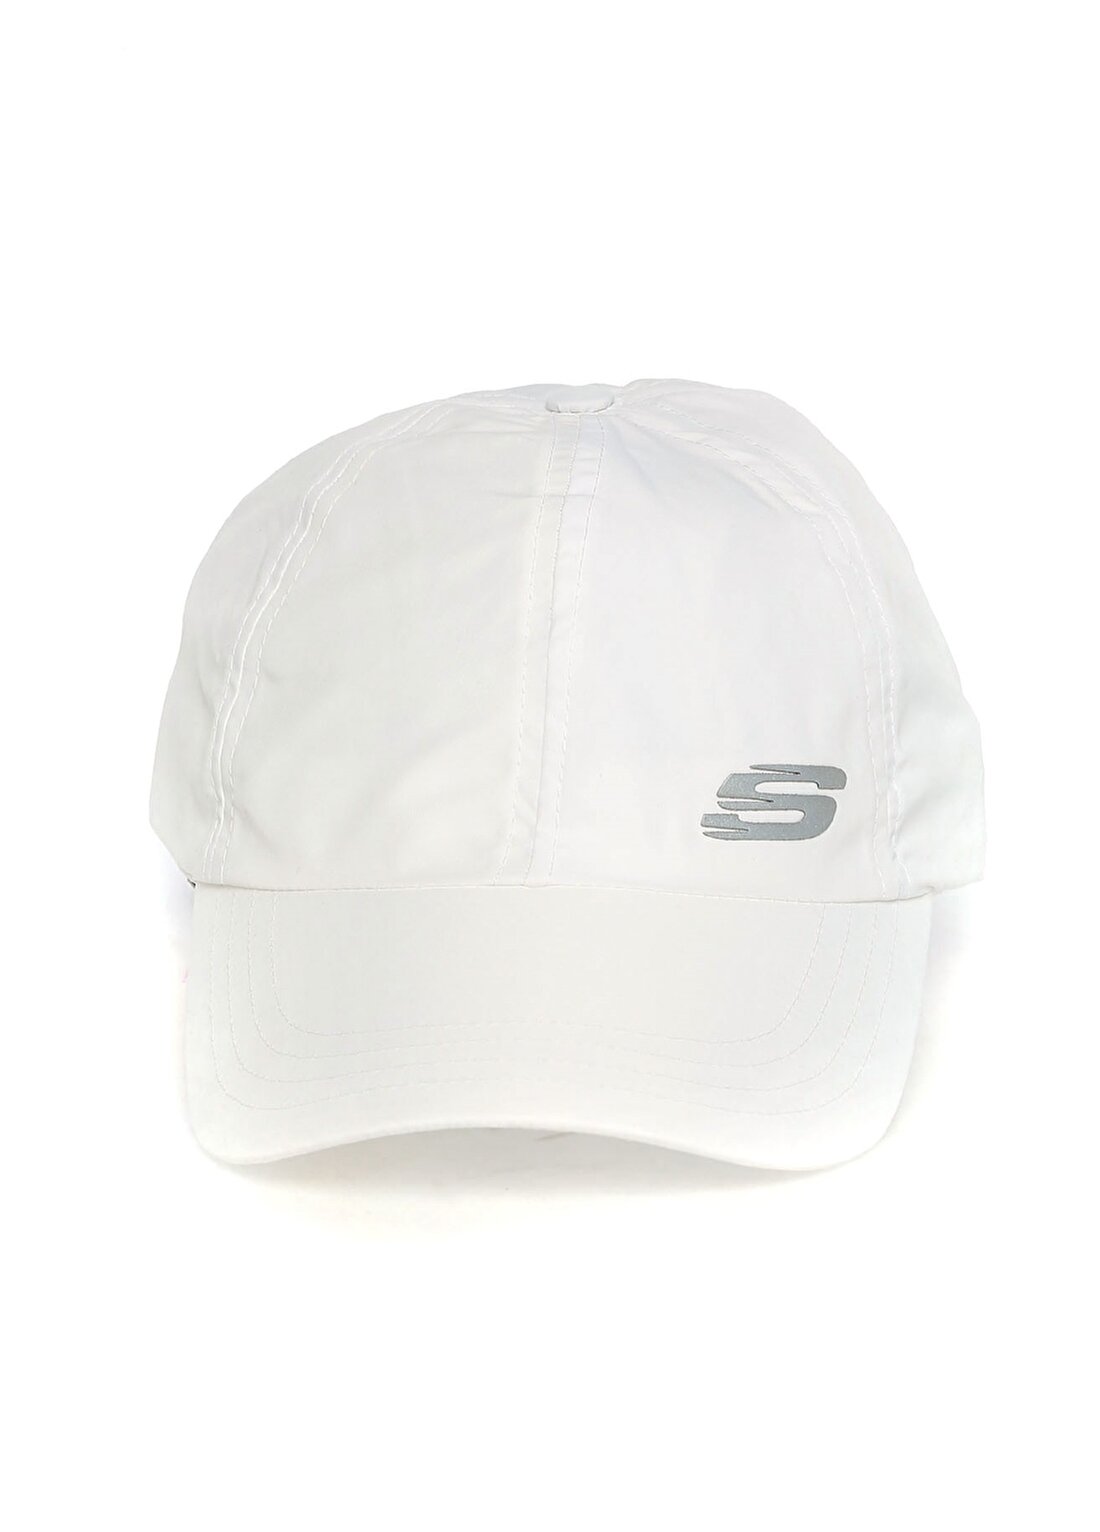 Skechers Beyaz Erkek Şapka S221478-100 Summer Cap Headwear